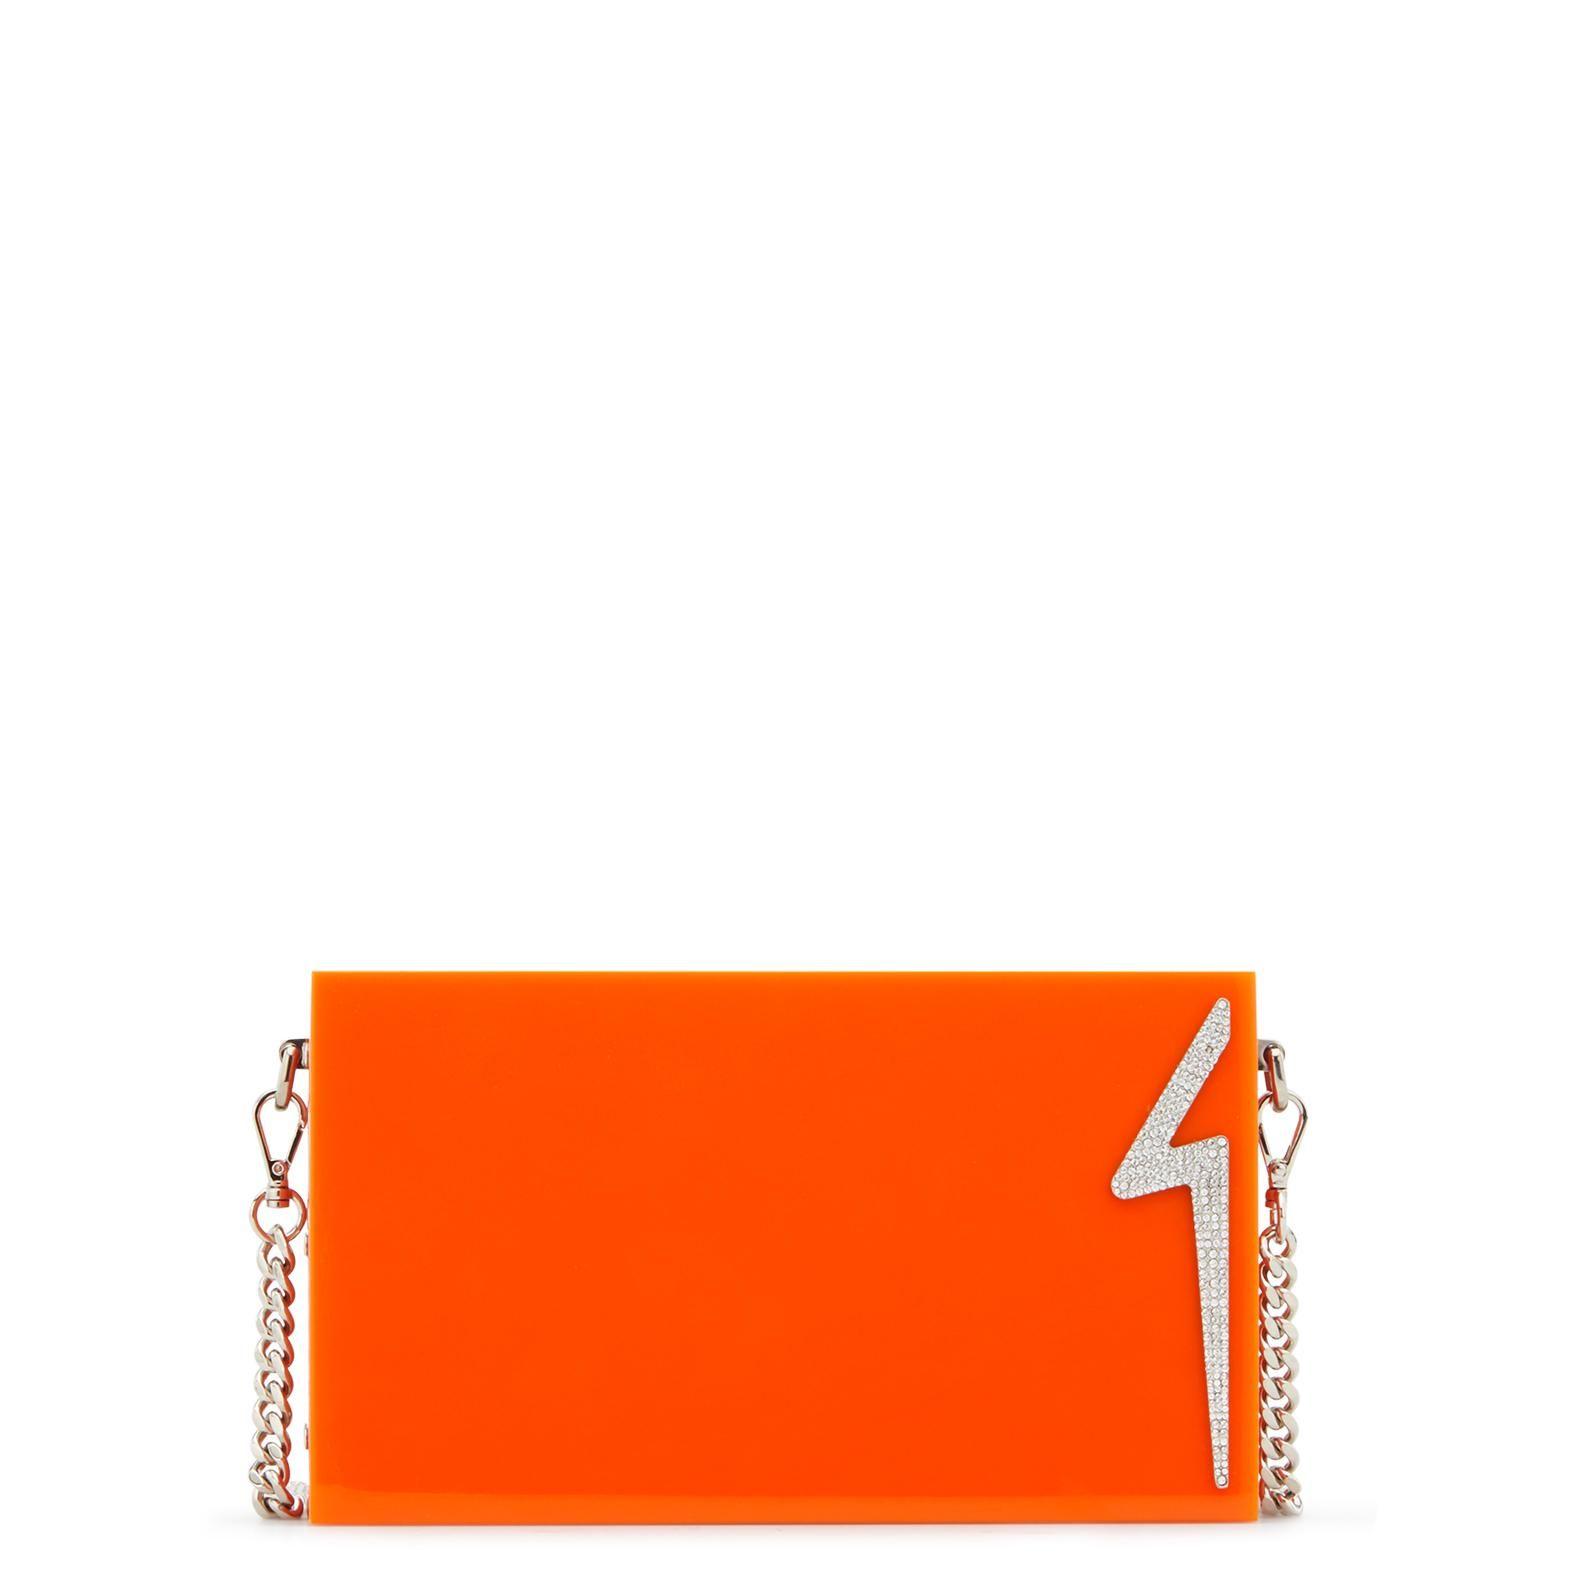 Orange G Logo - Giuseppe Zanotti G-logo in Orange - Lyst